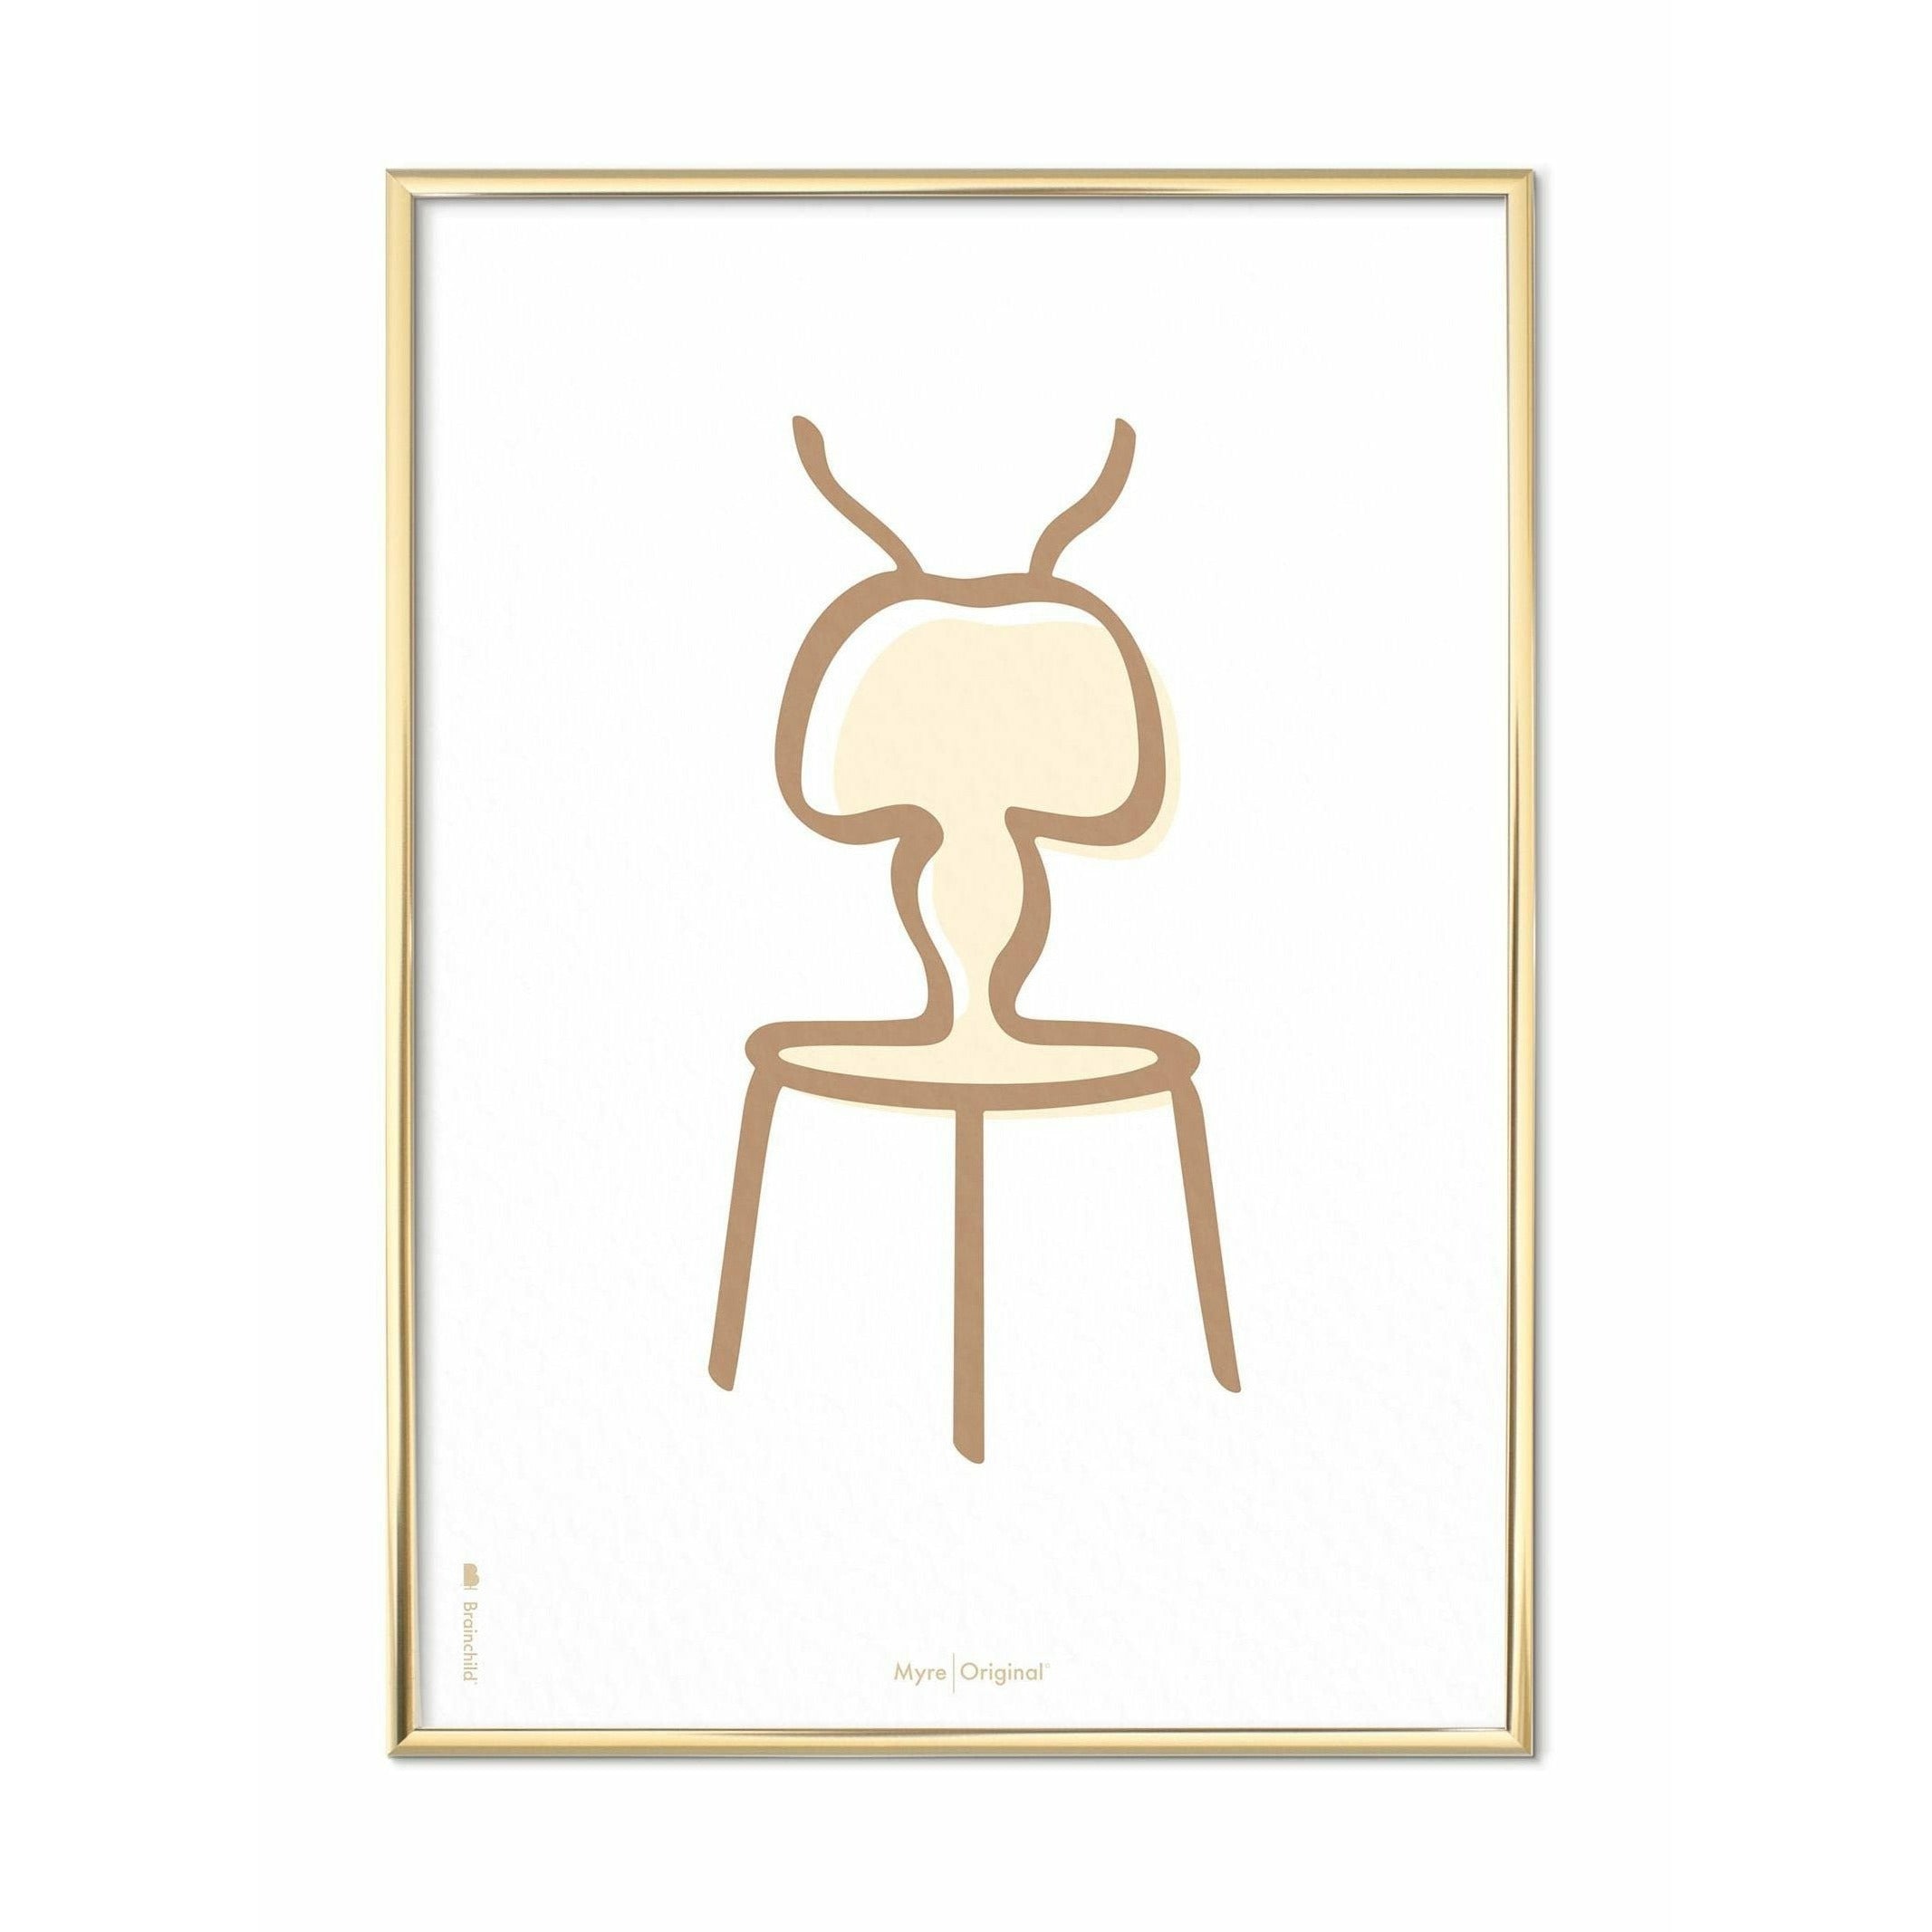 Brainchild Ant Line plakat, messingfarvet ramme 50x70 cm, hvid baggrund